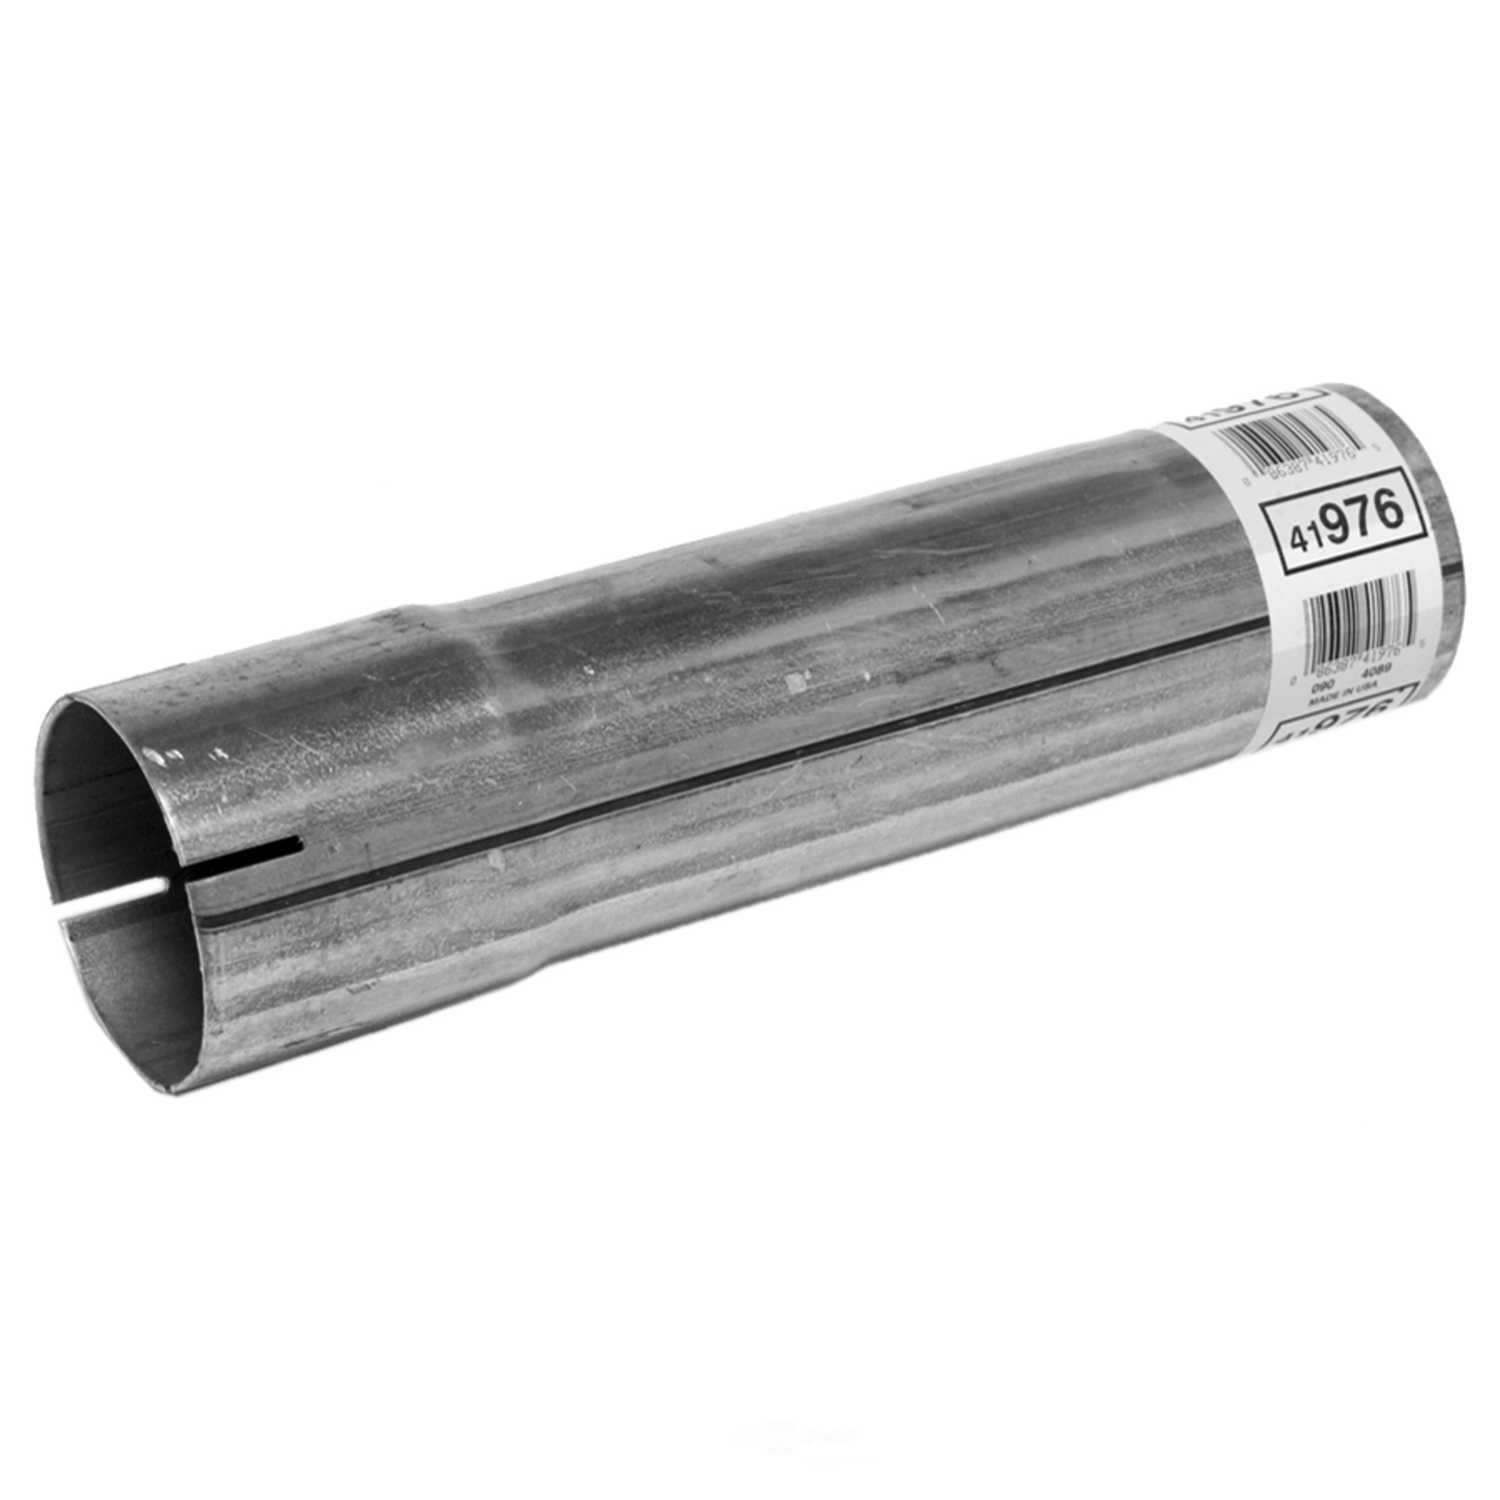 WALKER - Exhaust Pipe Connector (Y-Pipe) - WAL 41976